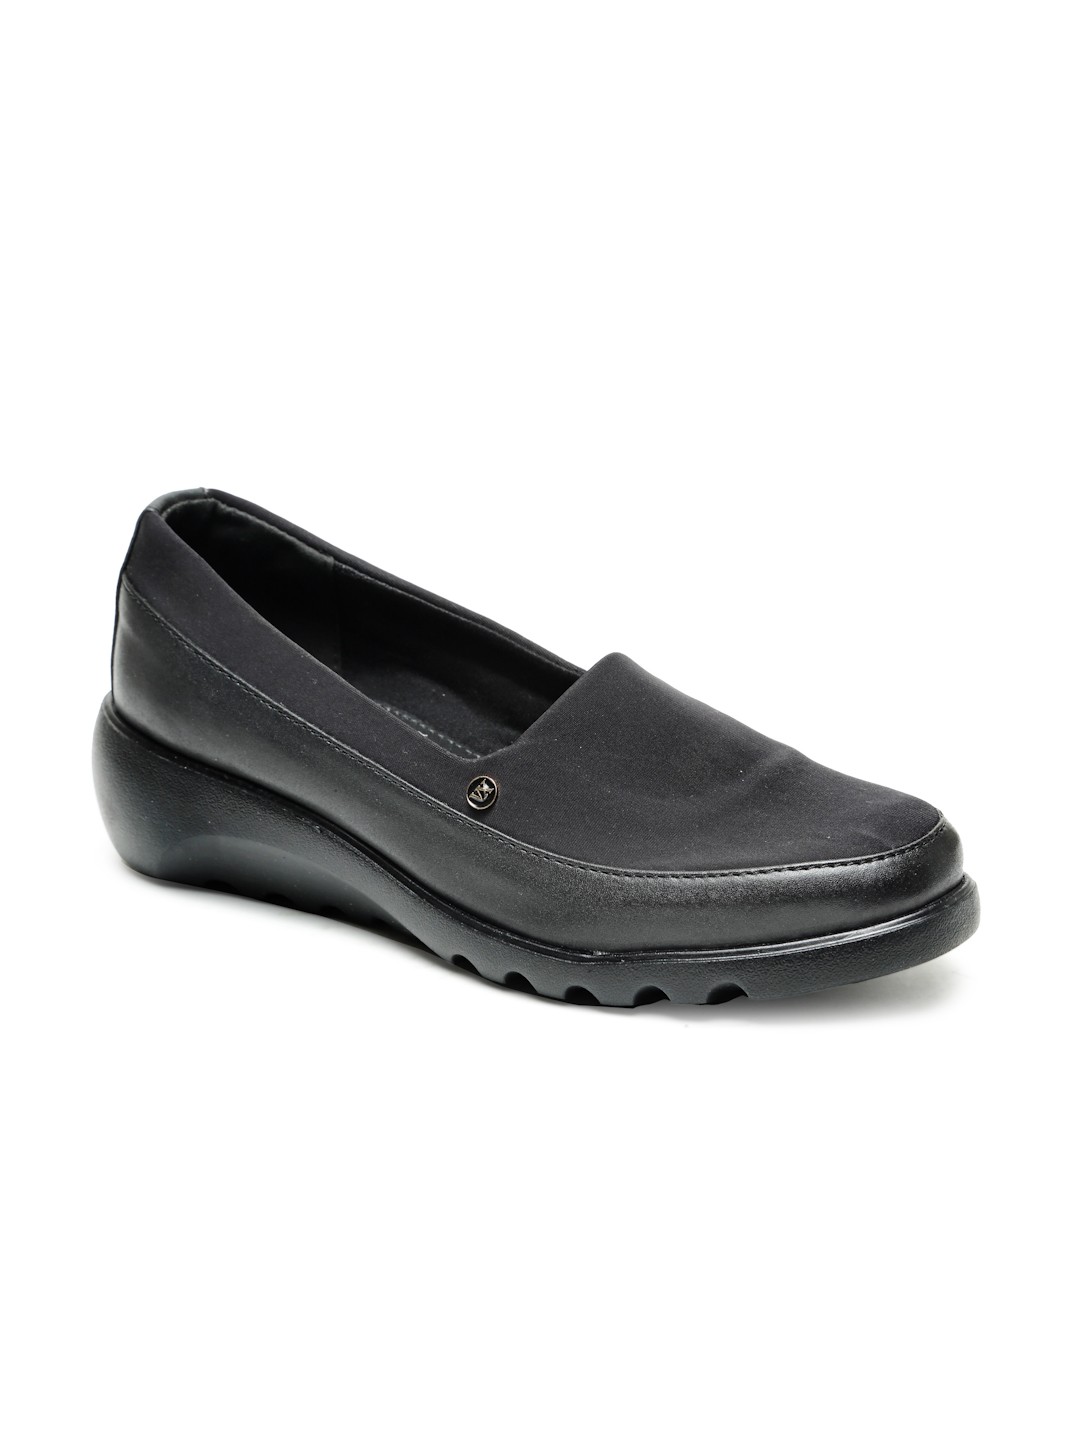 Buy Von Wellx Germany Comfort Women's Black Casual Shoes Elsa Online in Bhopal